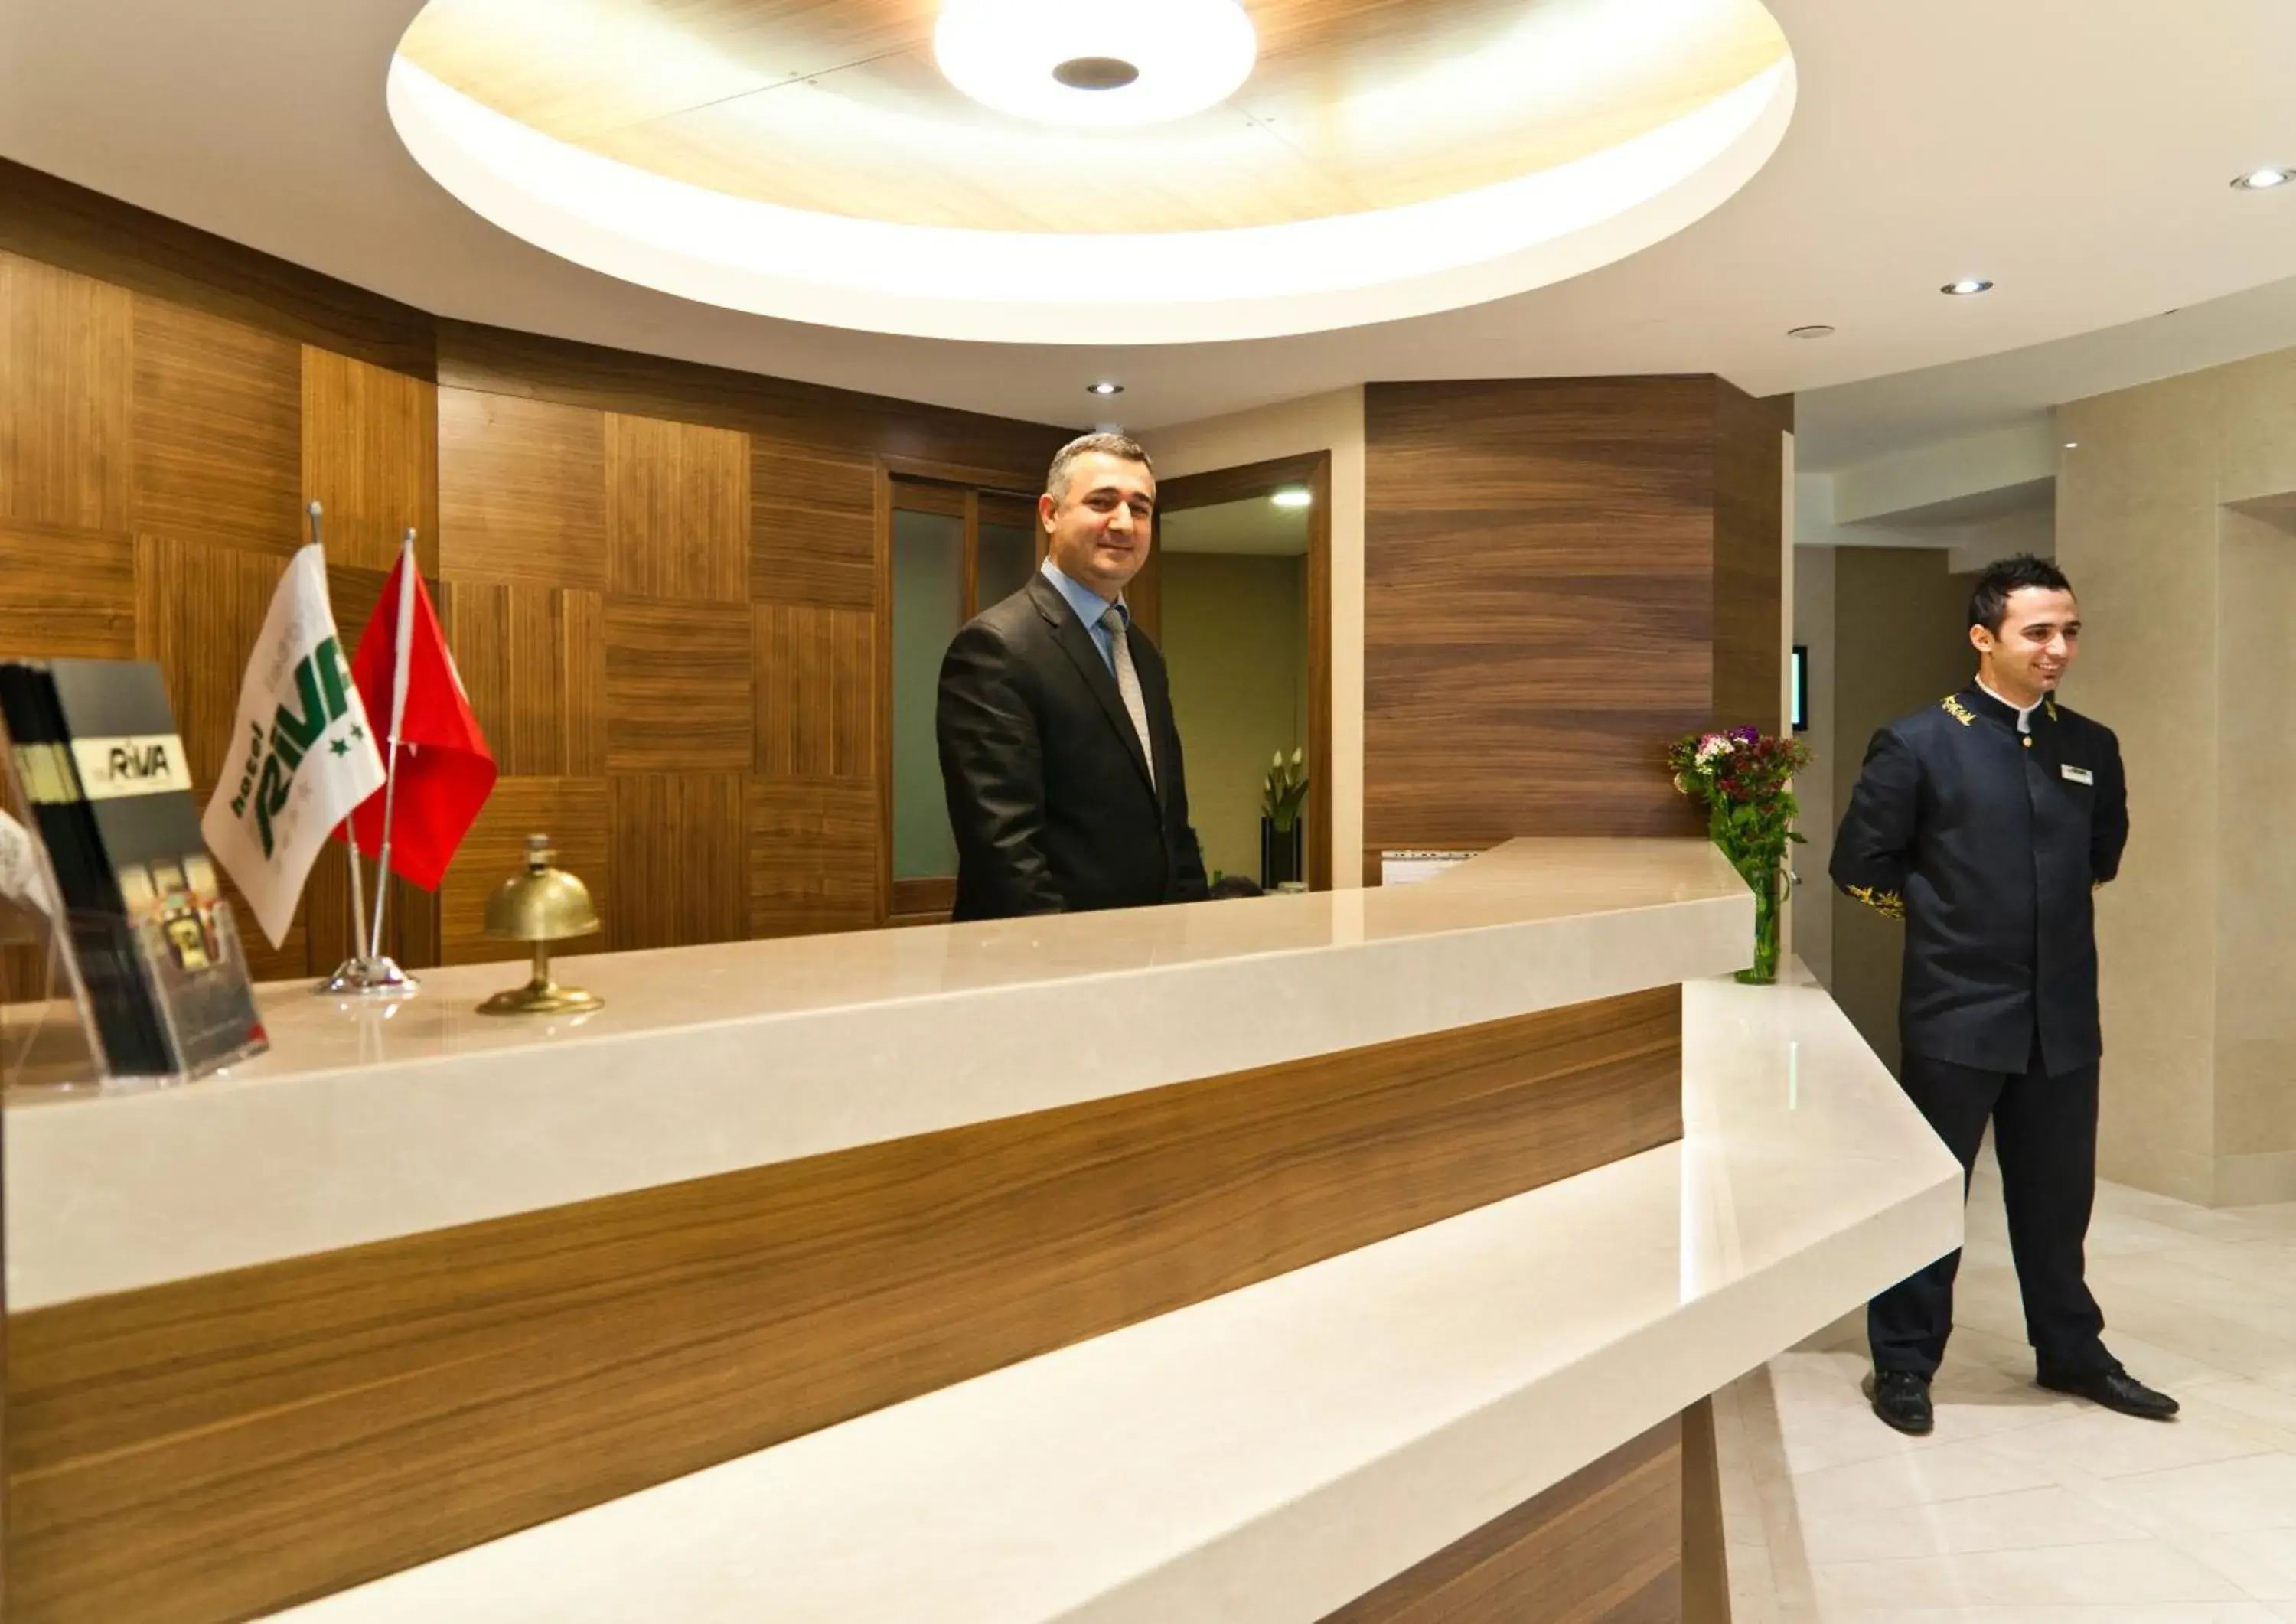 Staff in Riva Hotel Taksim